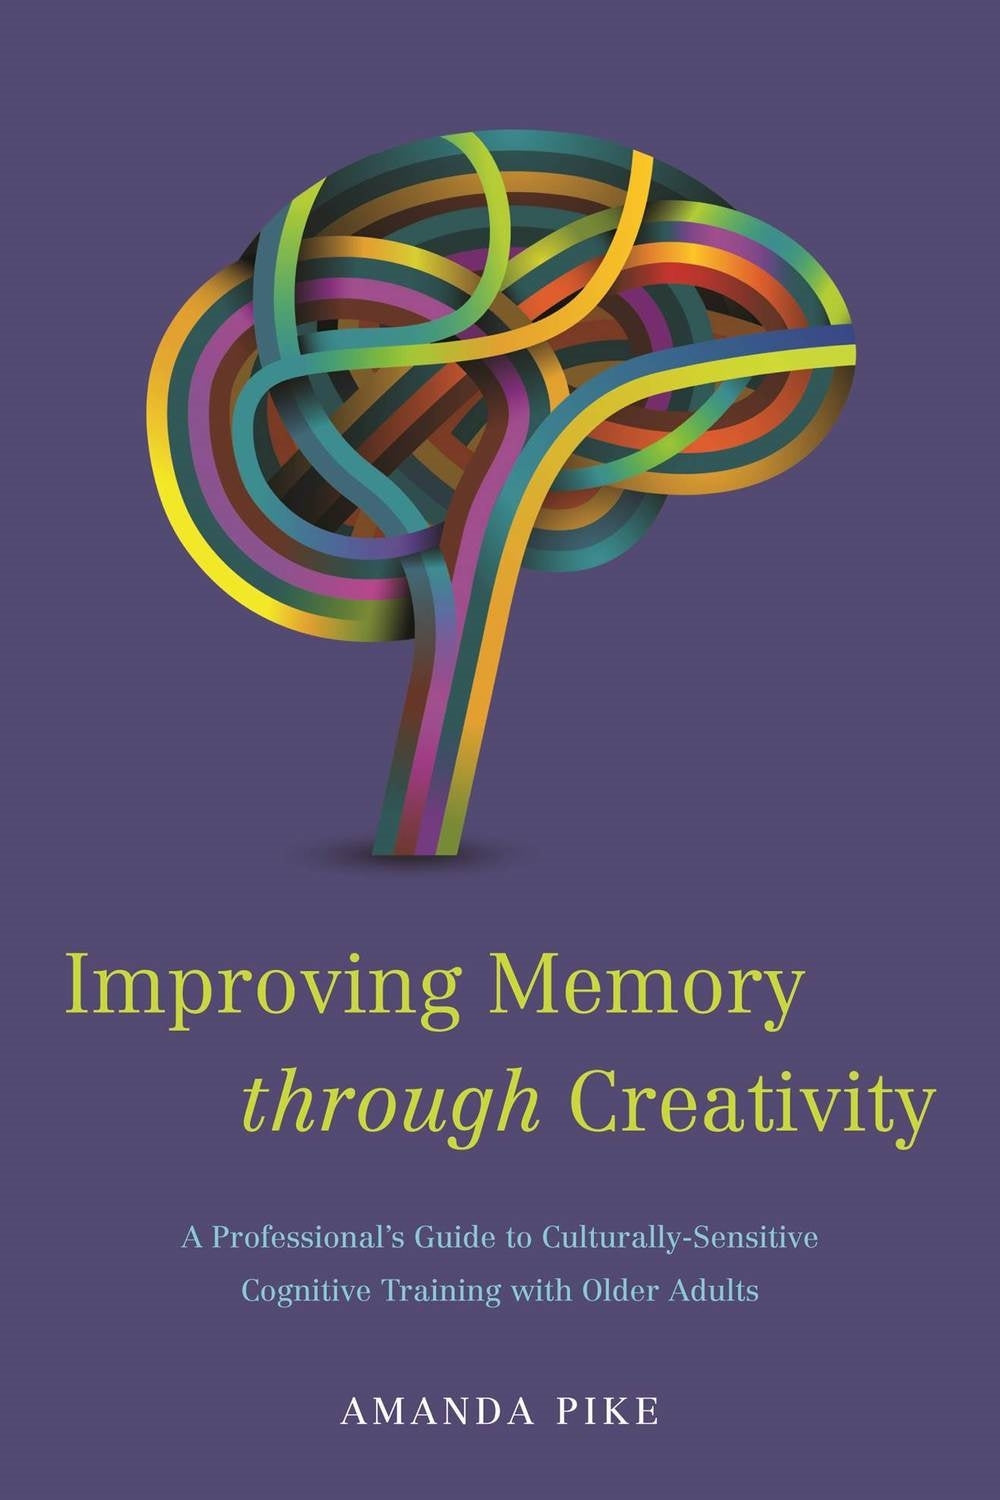 Improving Memory through Creativity by Amanda Pike